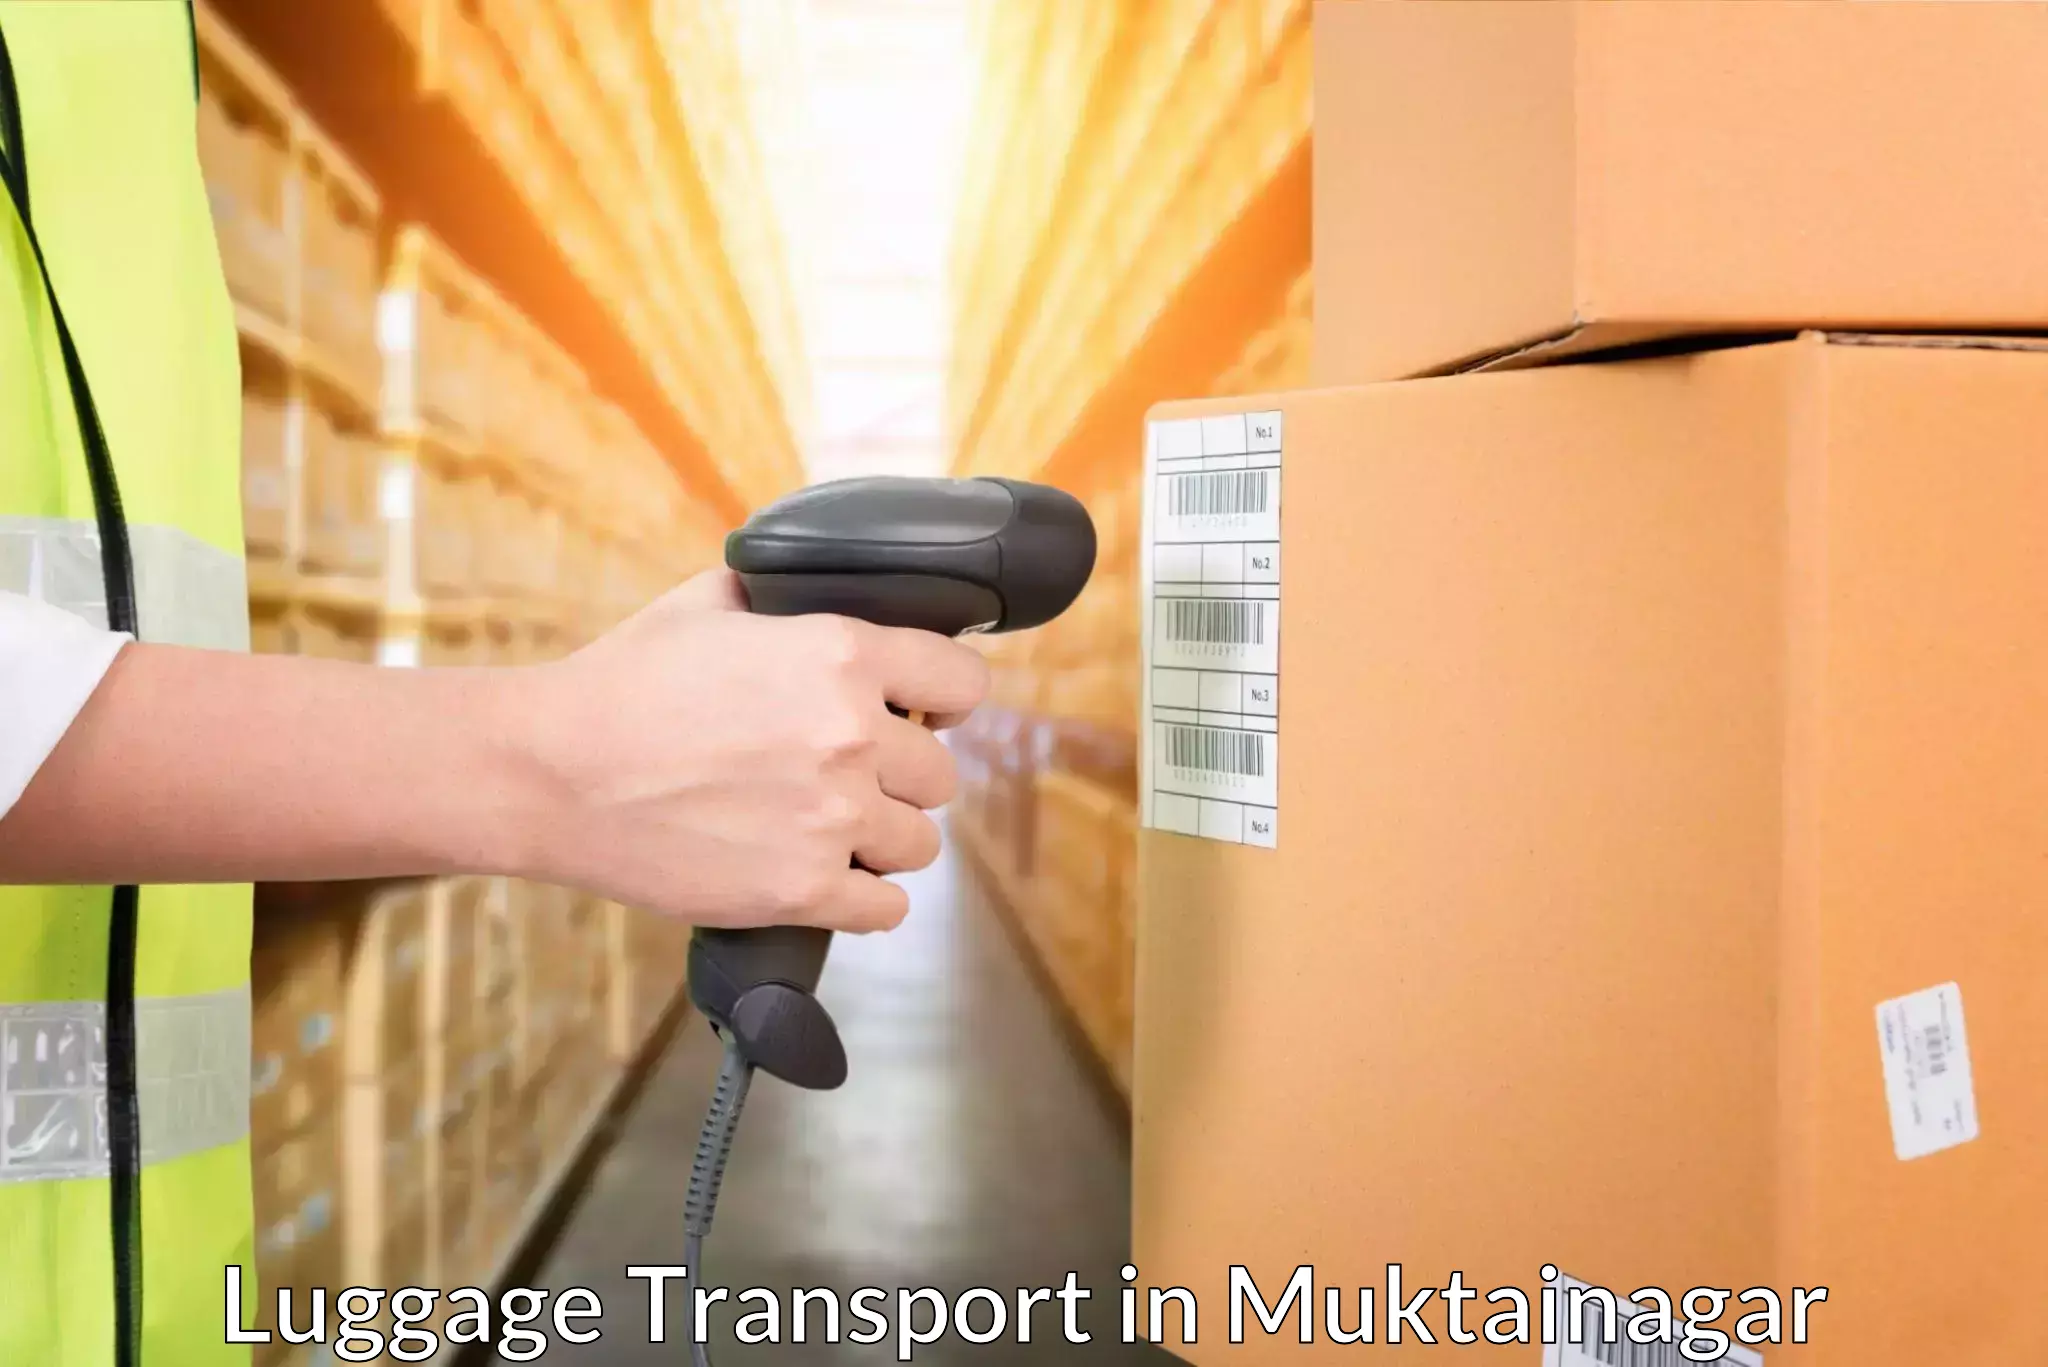 Baggage transport cost in Muktainagar